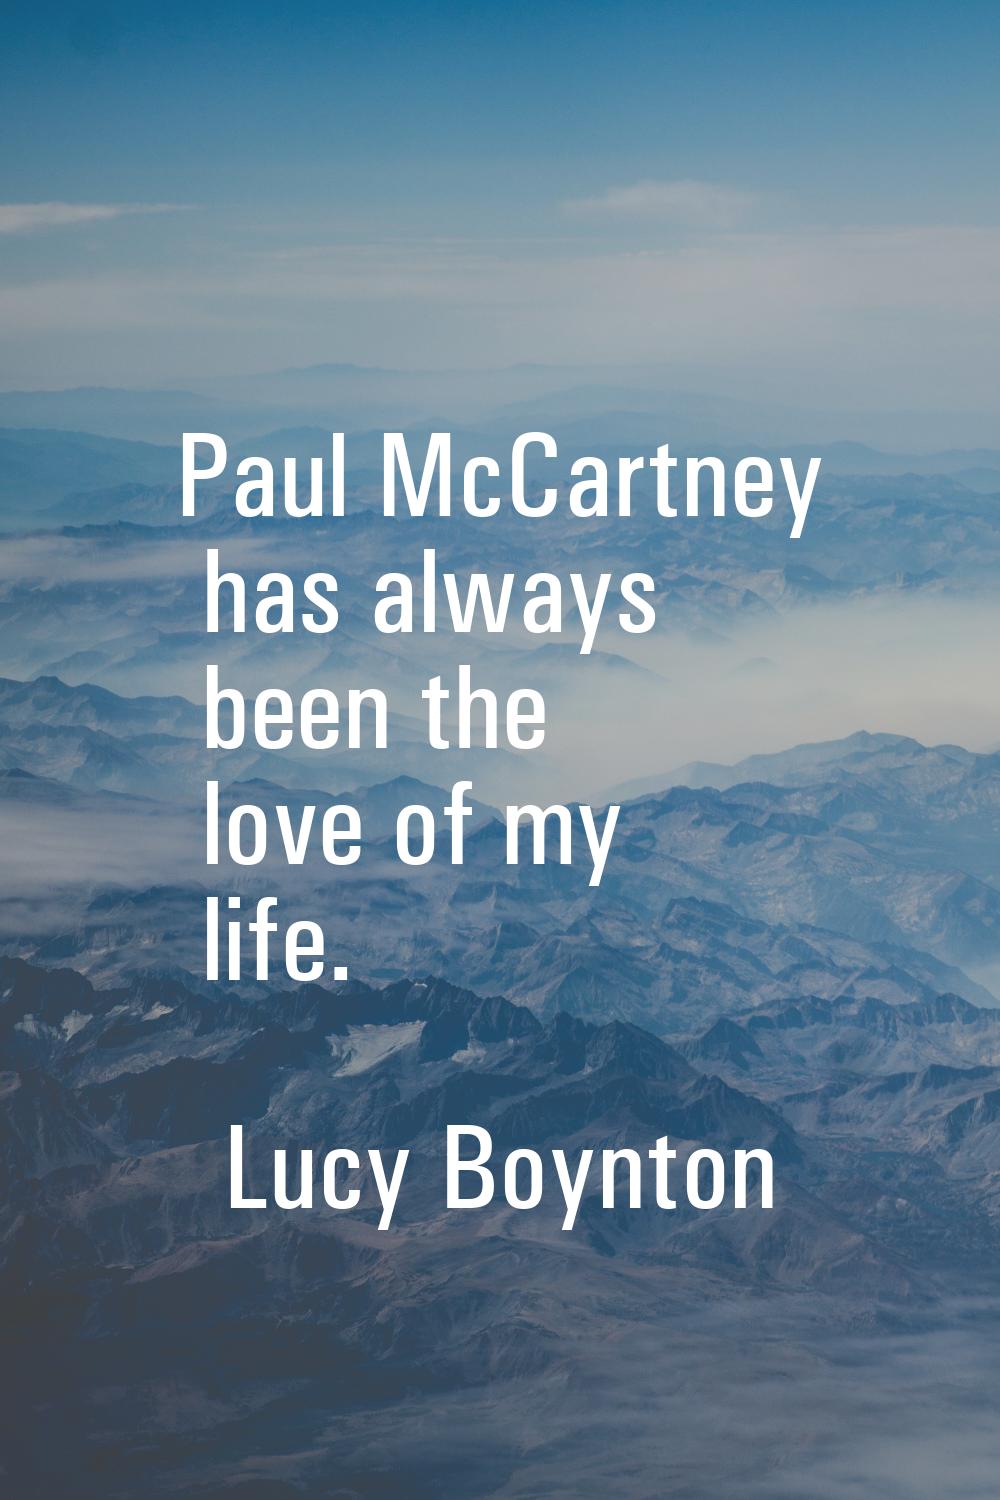 Paul McCartney has always been the love of my life.